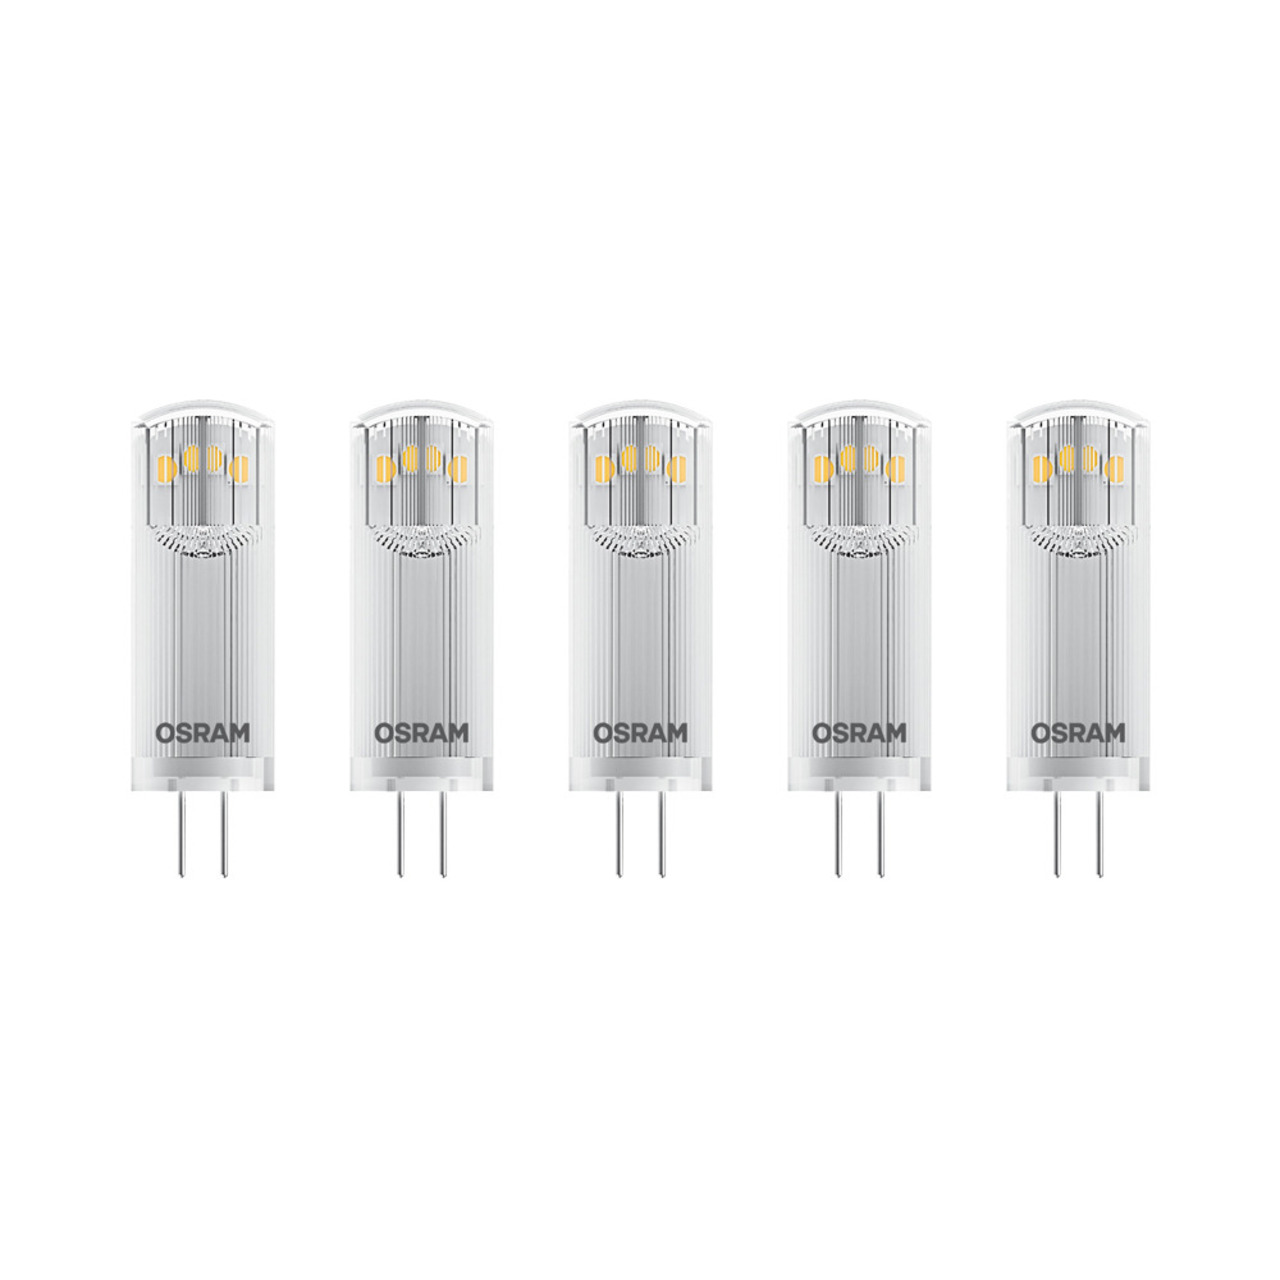 OSRAM 5er-Pack 1-8-W-G4-LED-Lampen- warmweiss- 12 V AC unter Beleuchtung